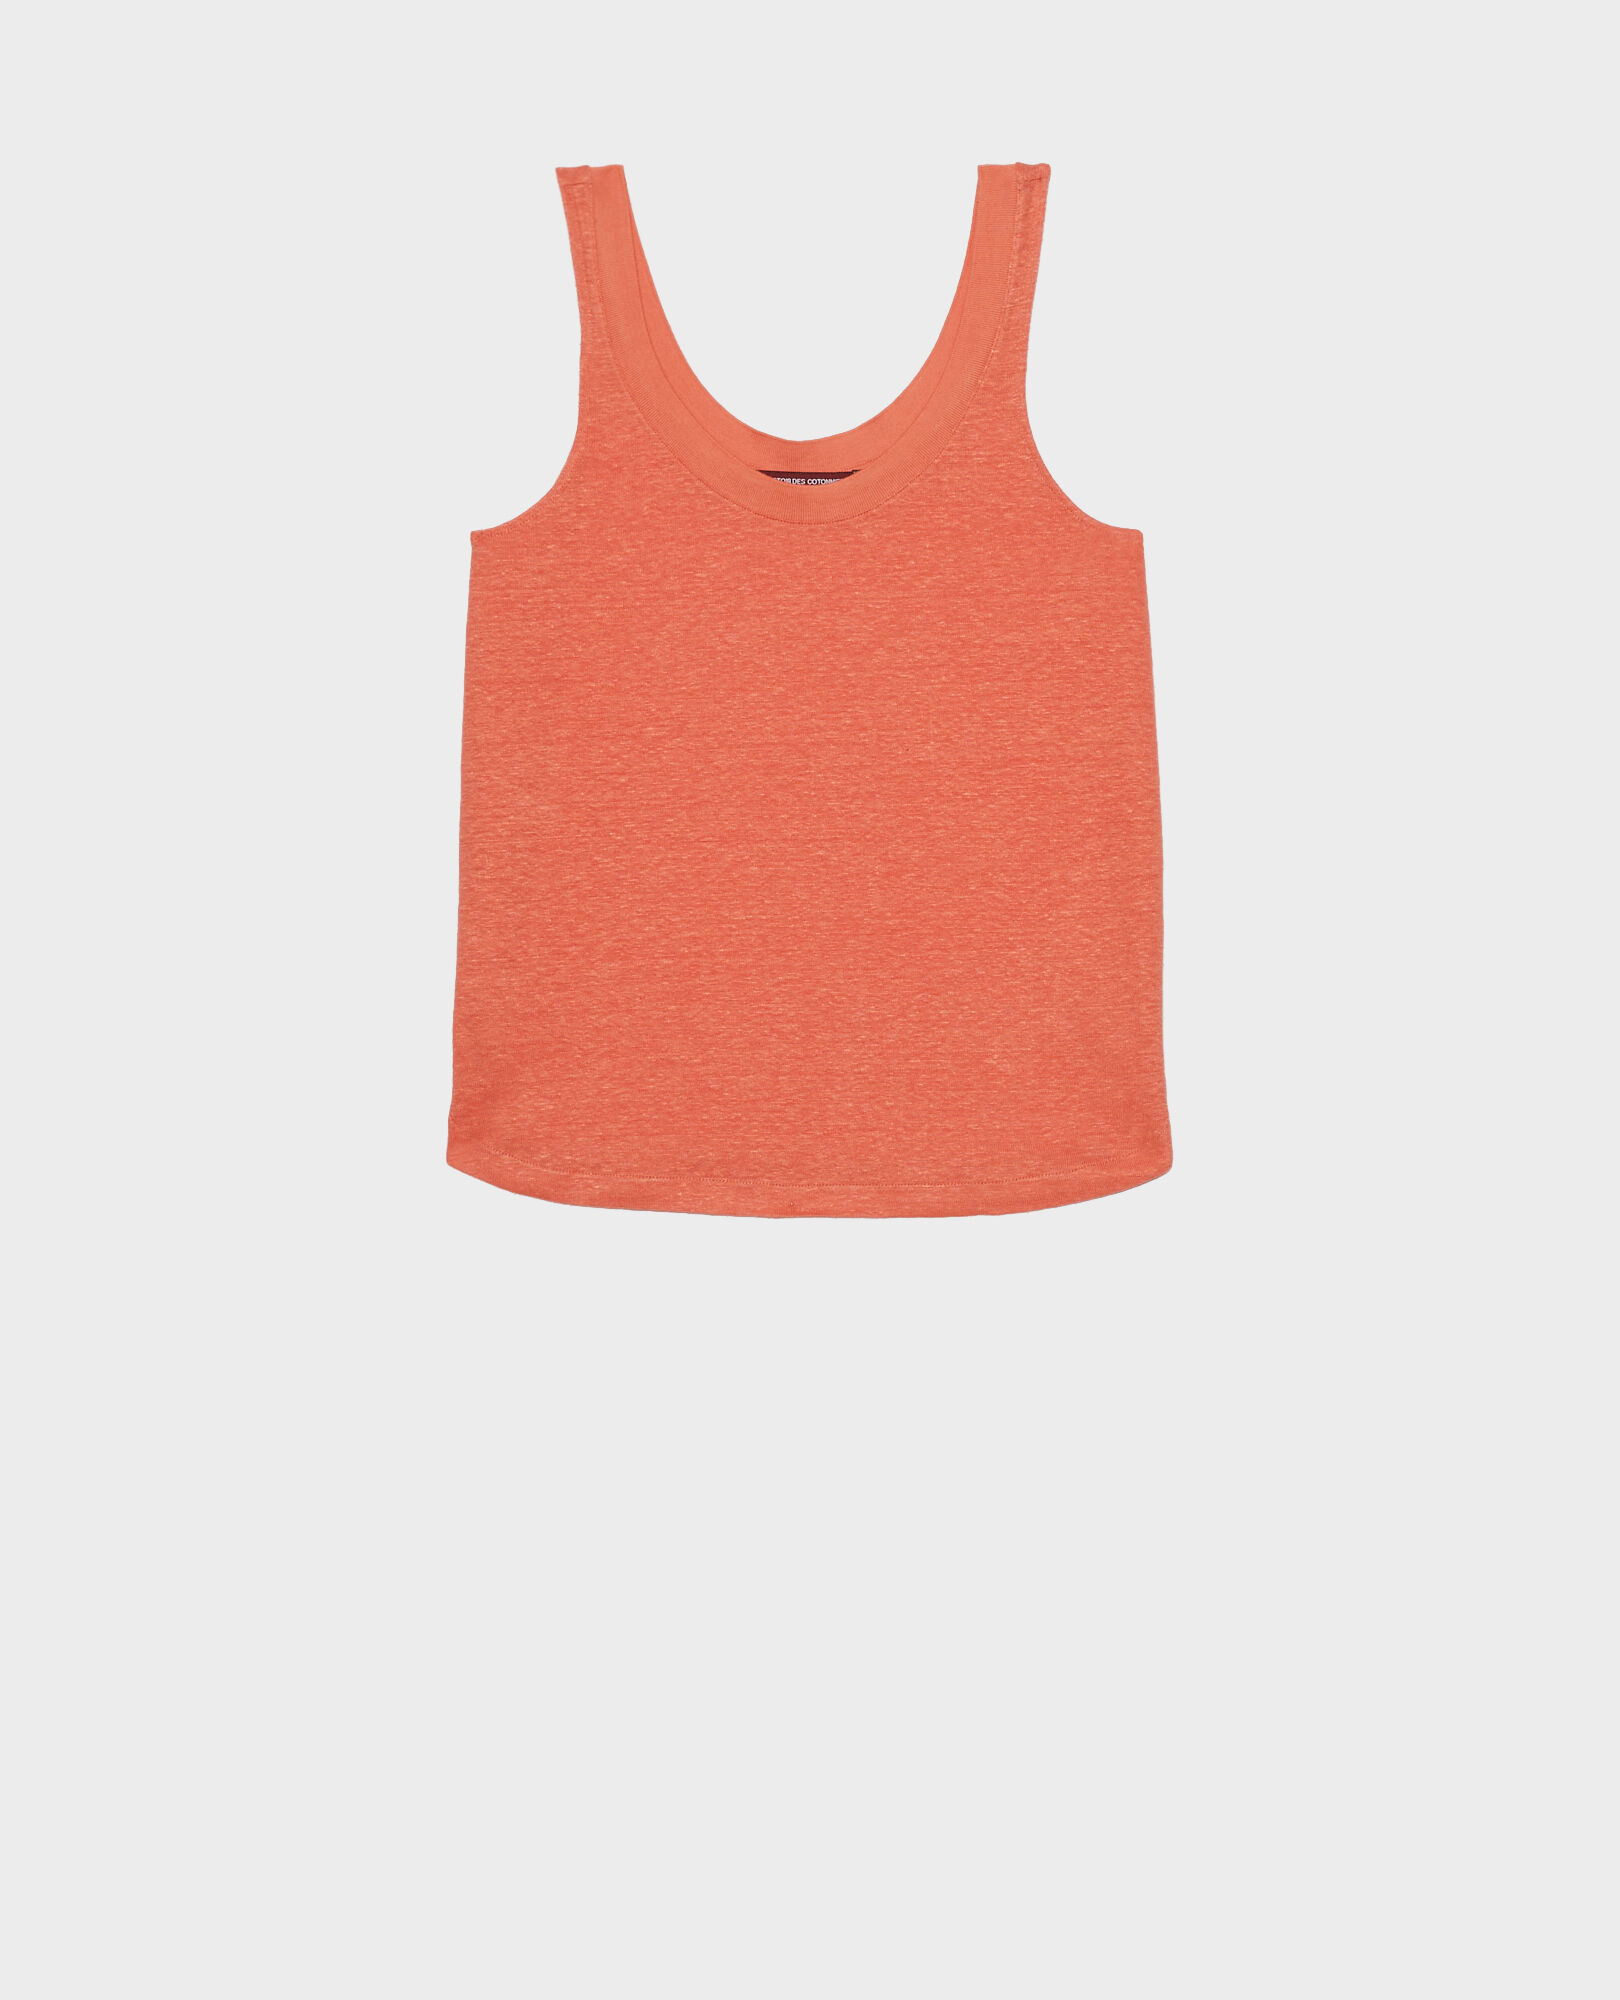 Ärmelloses T-Shirt aus Leinen 21 light orange 2ste054f05